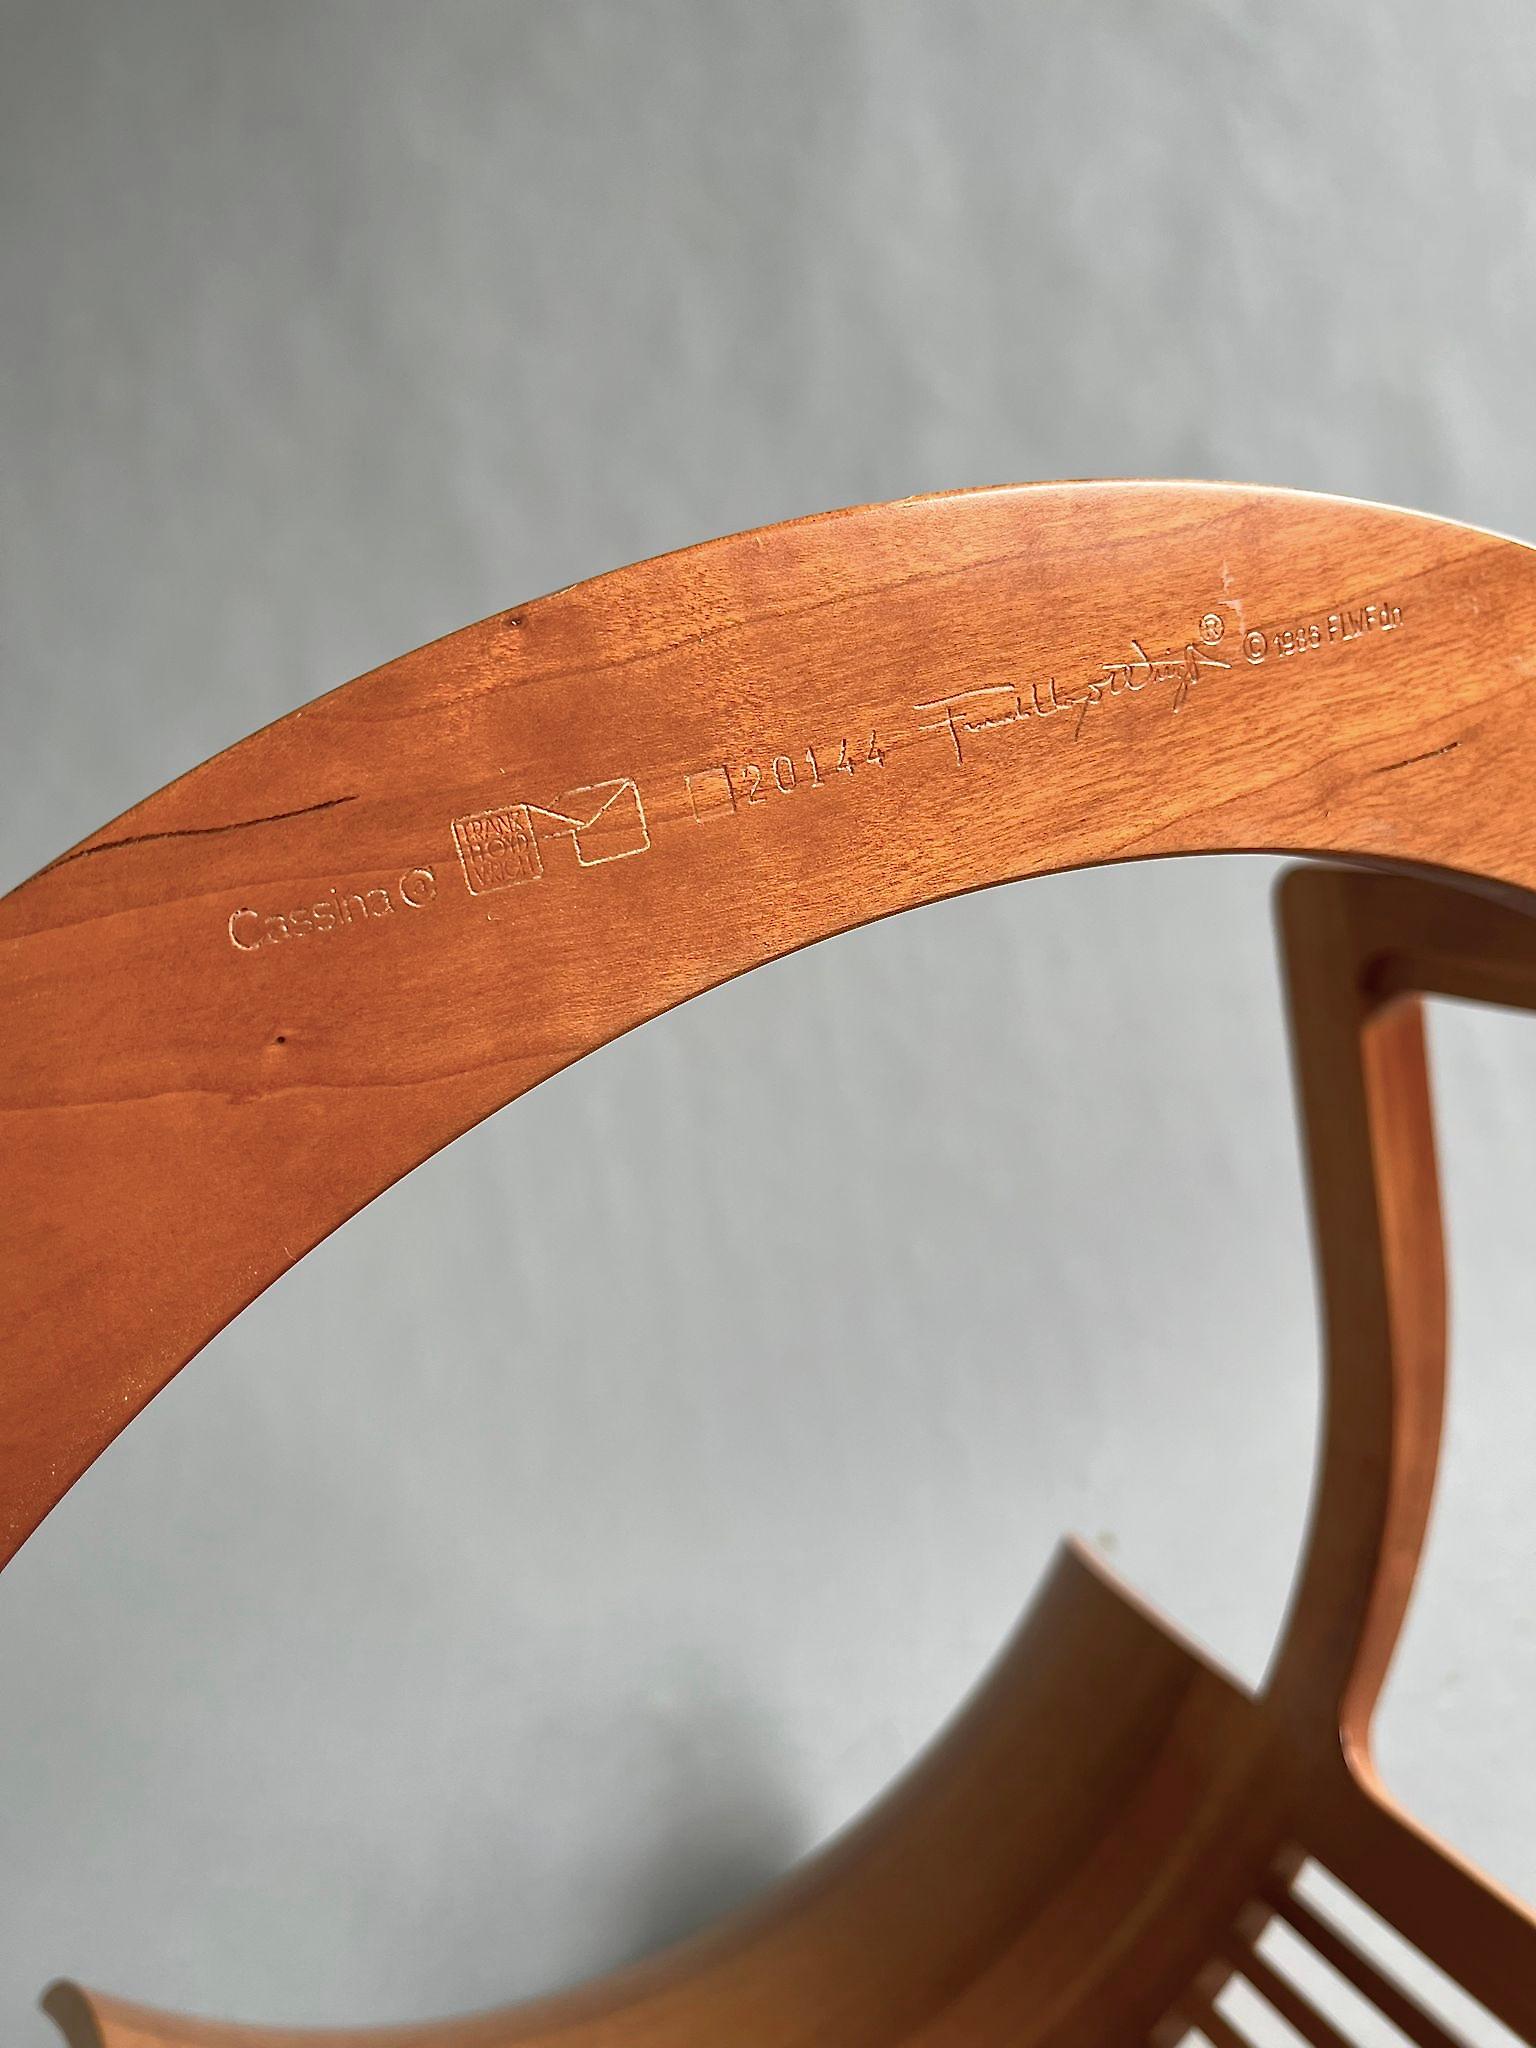 Tissu Ensemble de quatre chaises baril Frank Lloyd Wright d'origine par Cassina, Italie en vente